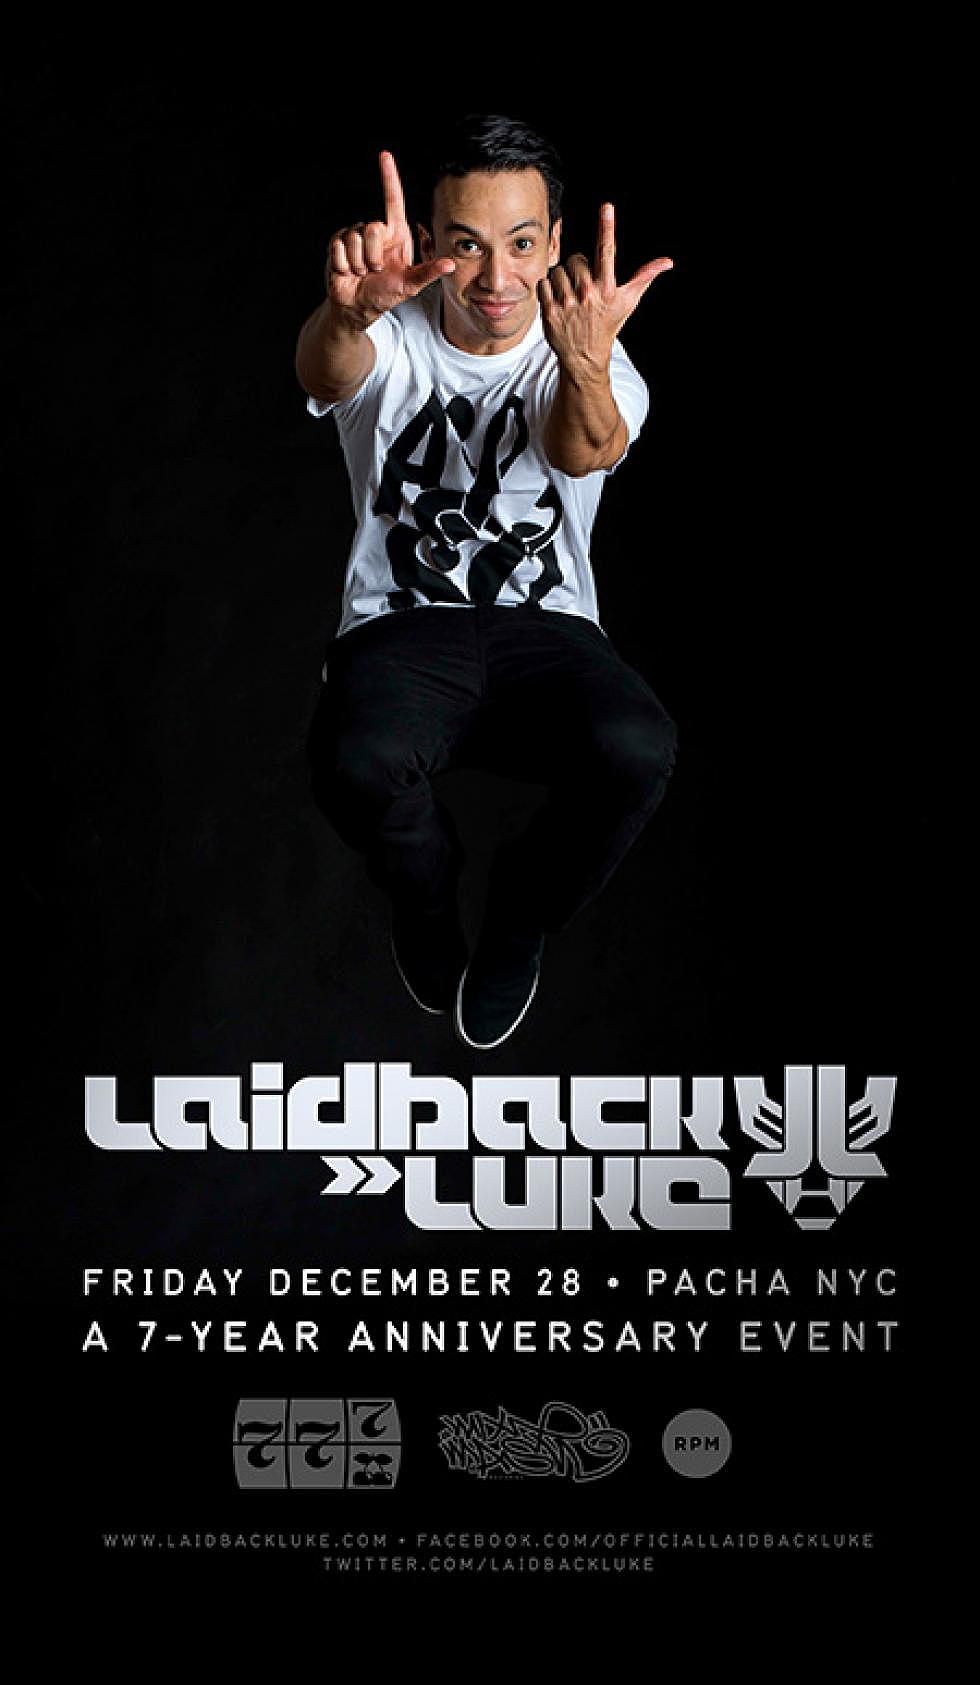 Pacha NYC 7-Year Anniversary first announcement: Laidback Luke on Dec 28